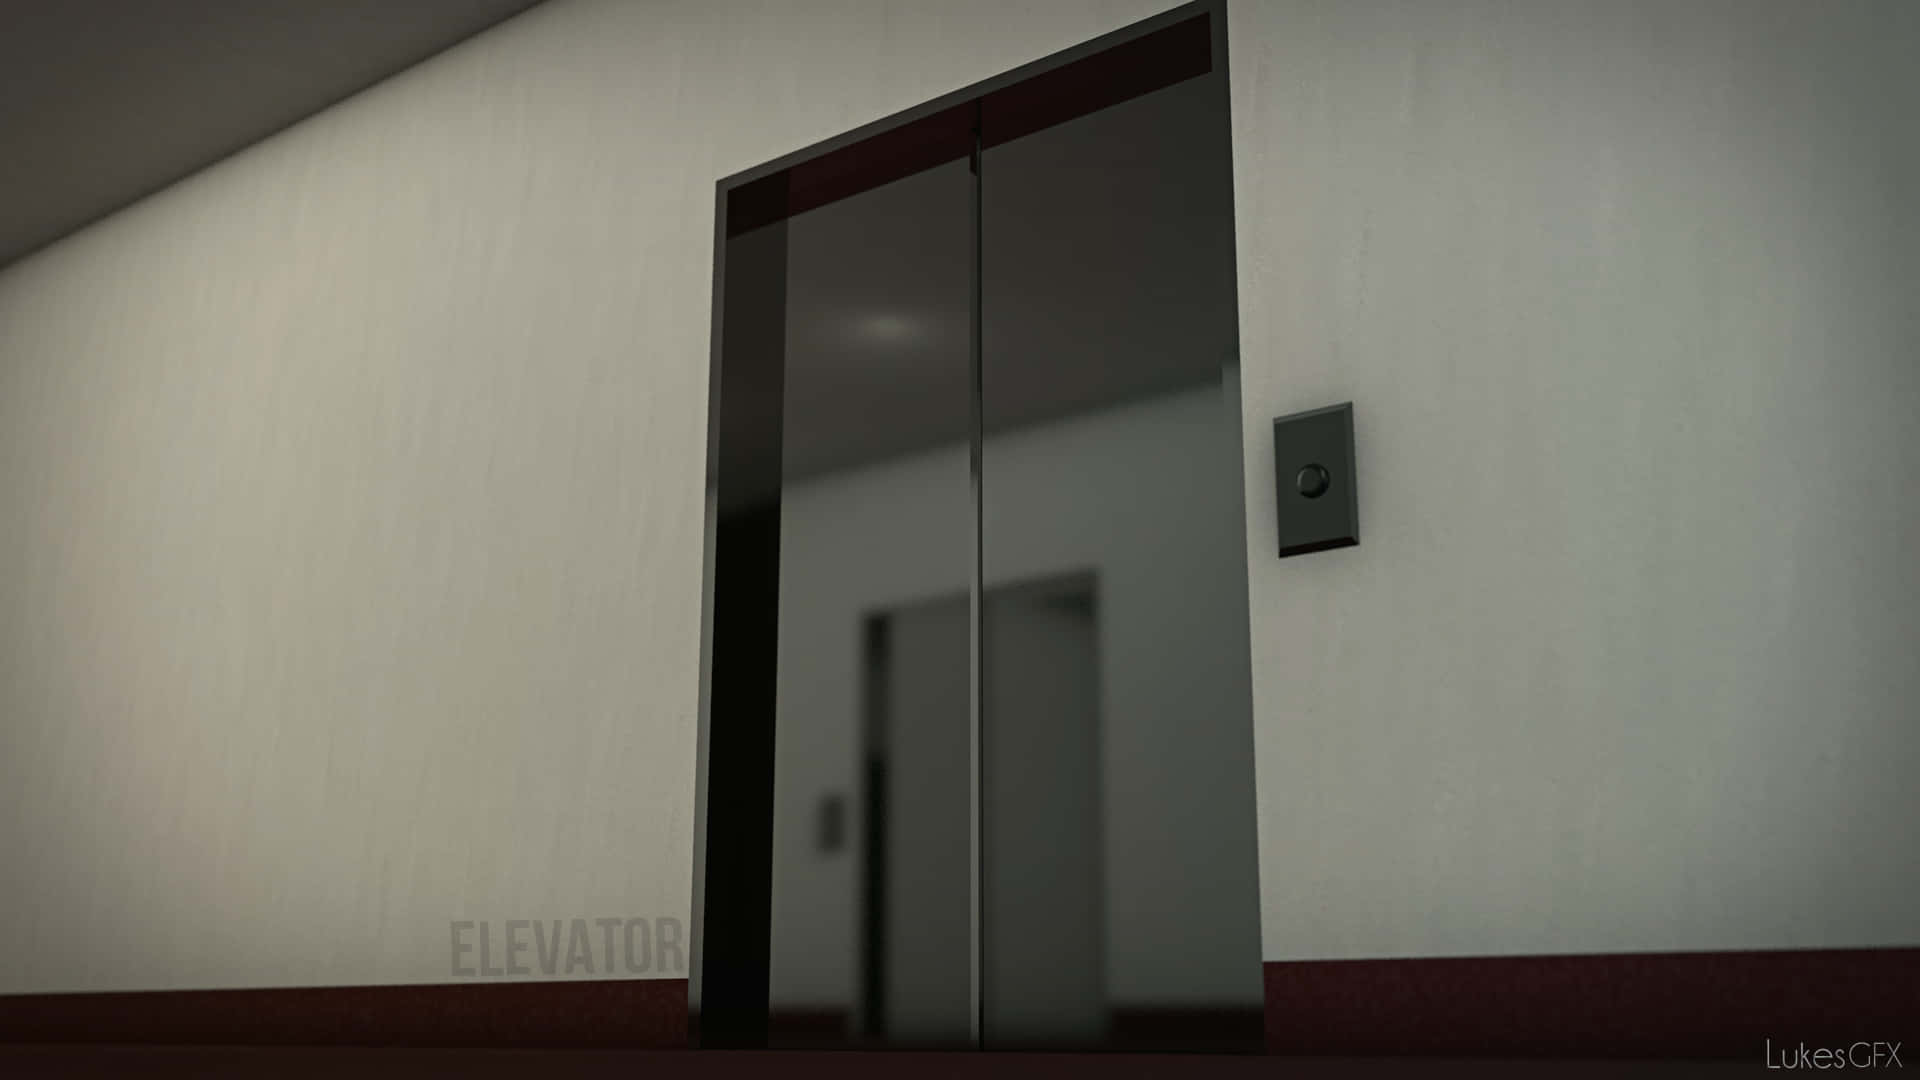 A Black Door With A Glass Door In The Background